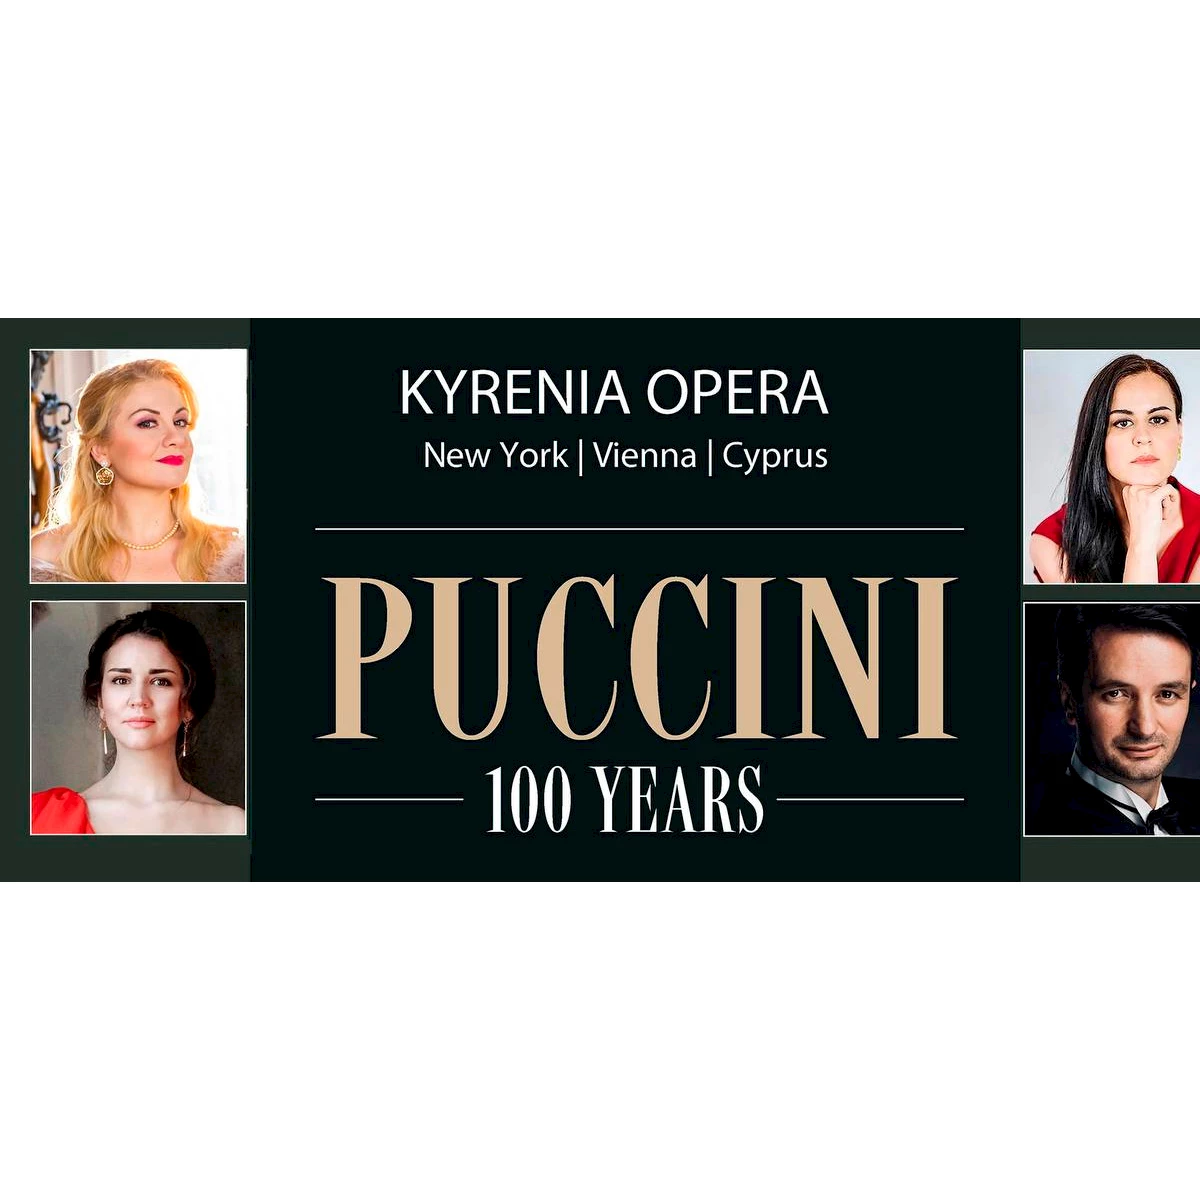 The Kyrenia Opera presents the play "Puccini: 100 years"